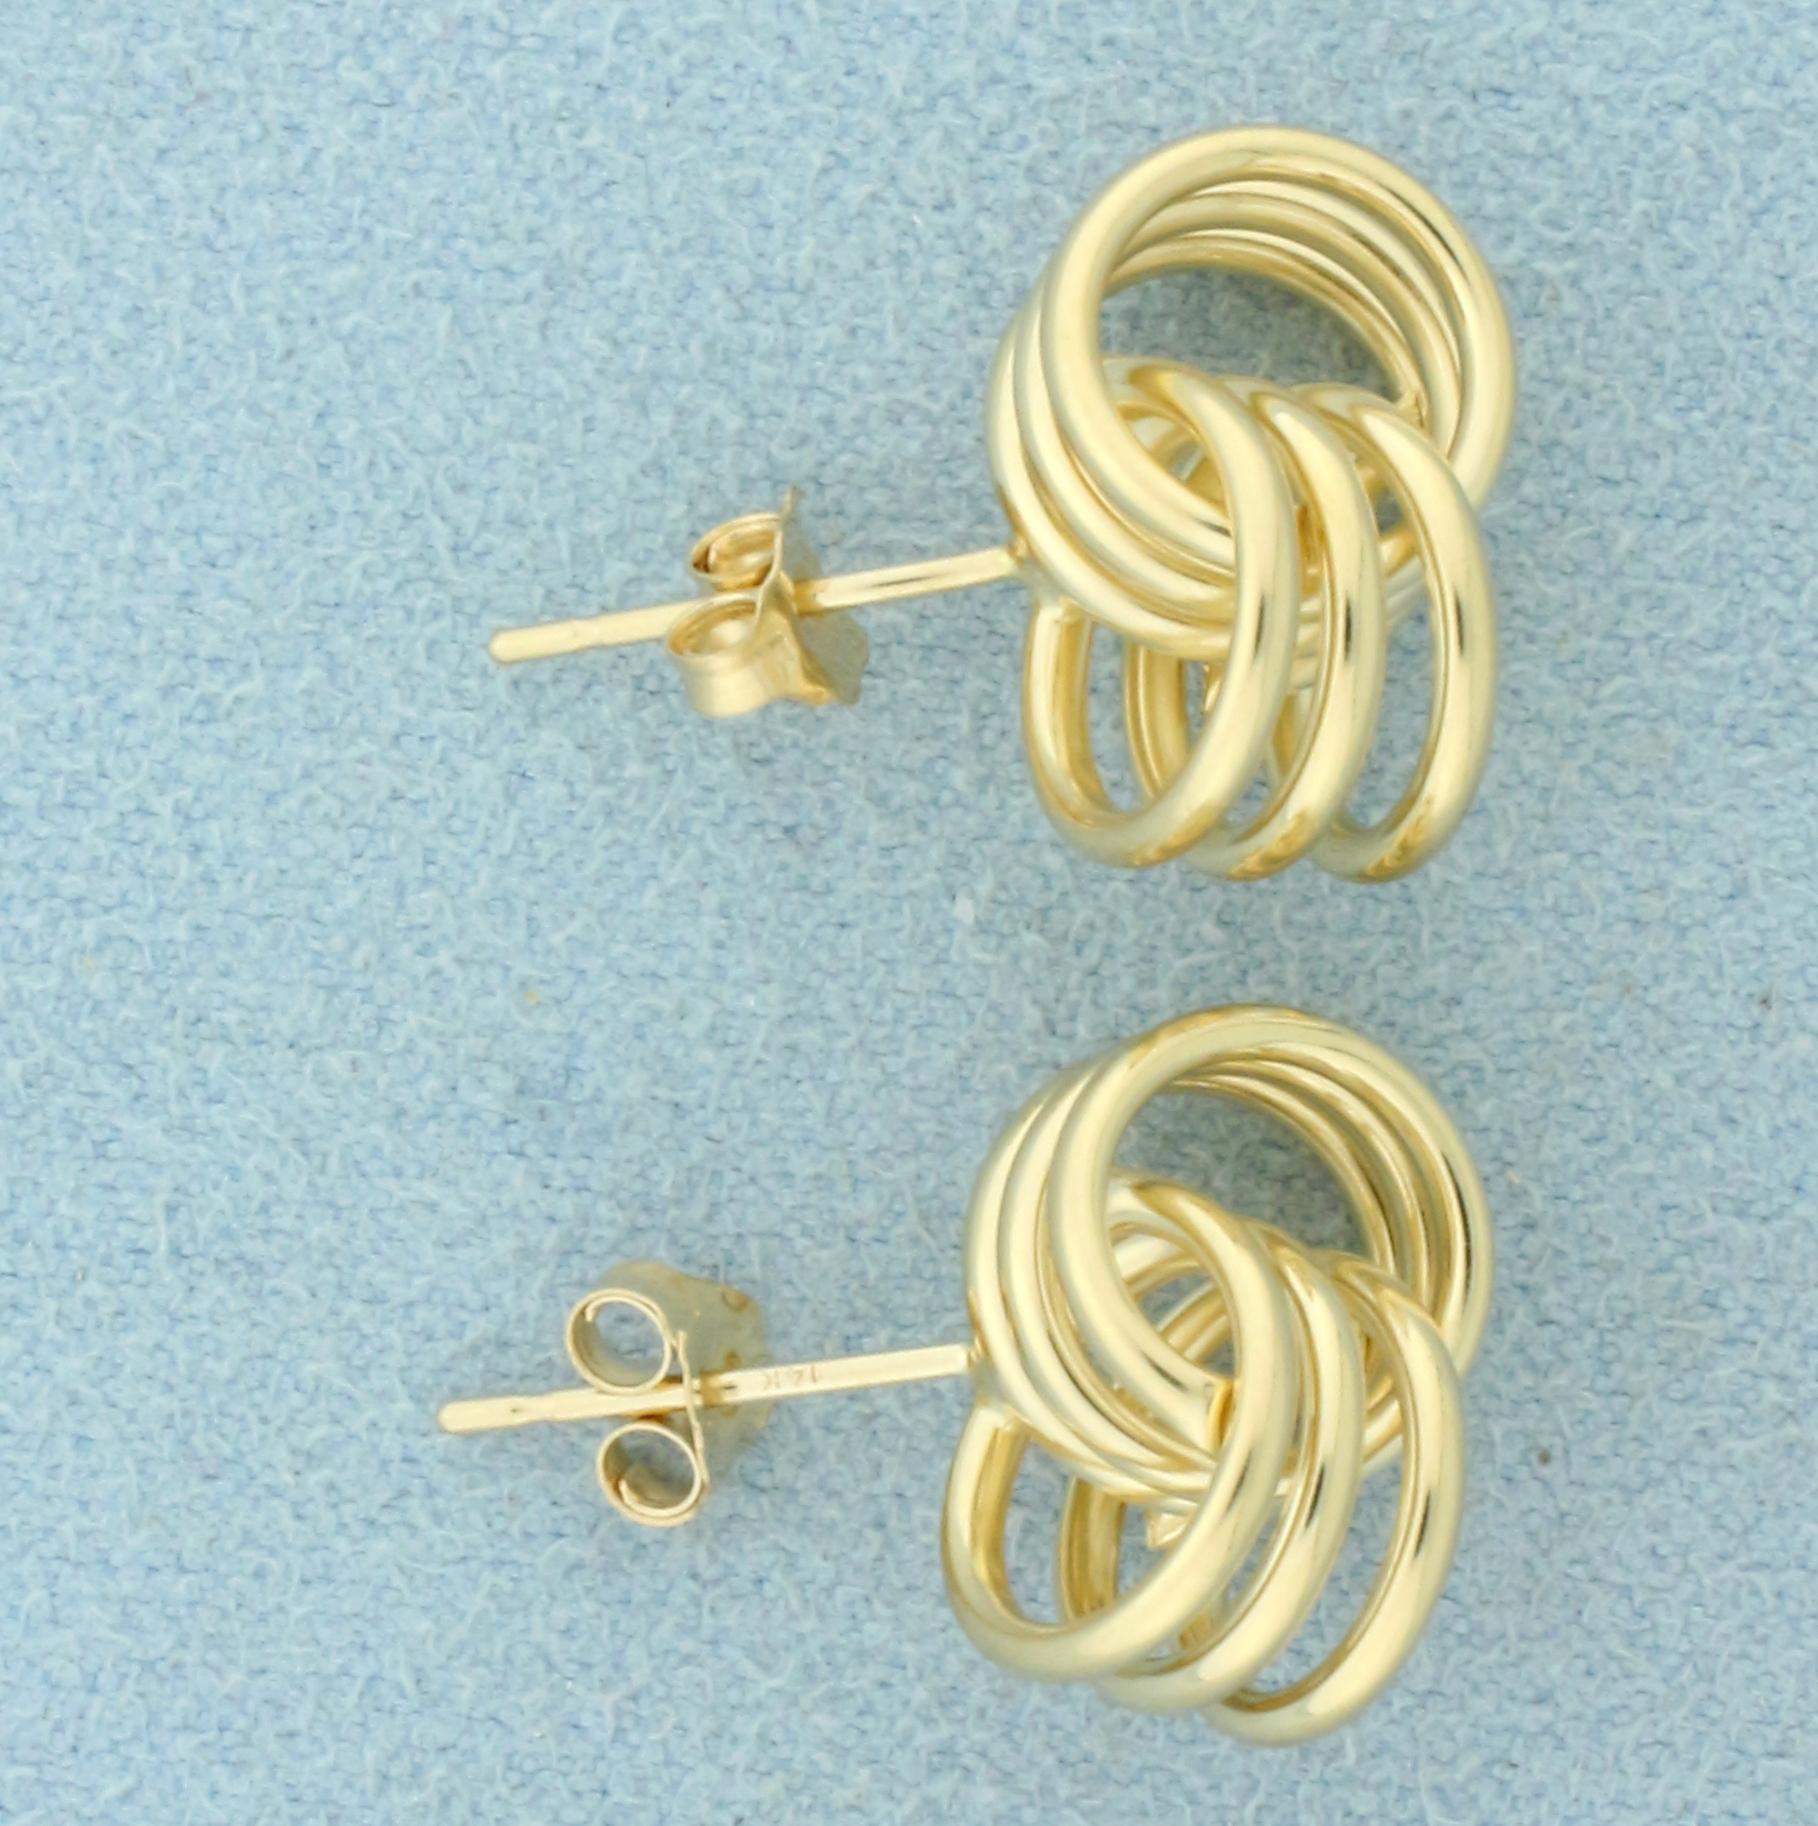 Unique Knot Design Earrings In 14k Yellow Gold | Proxibid